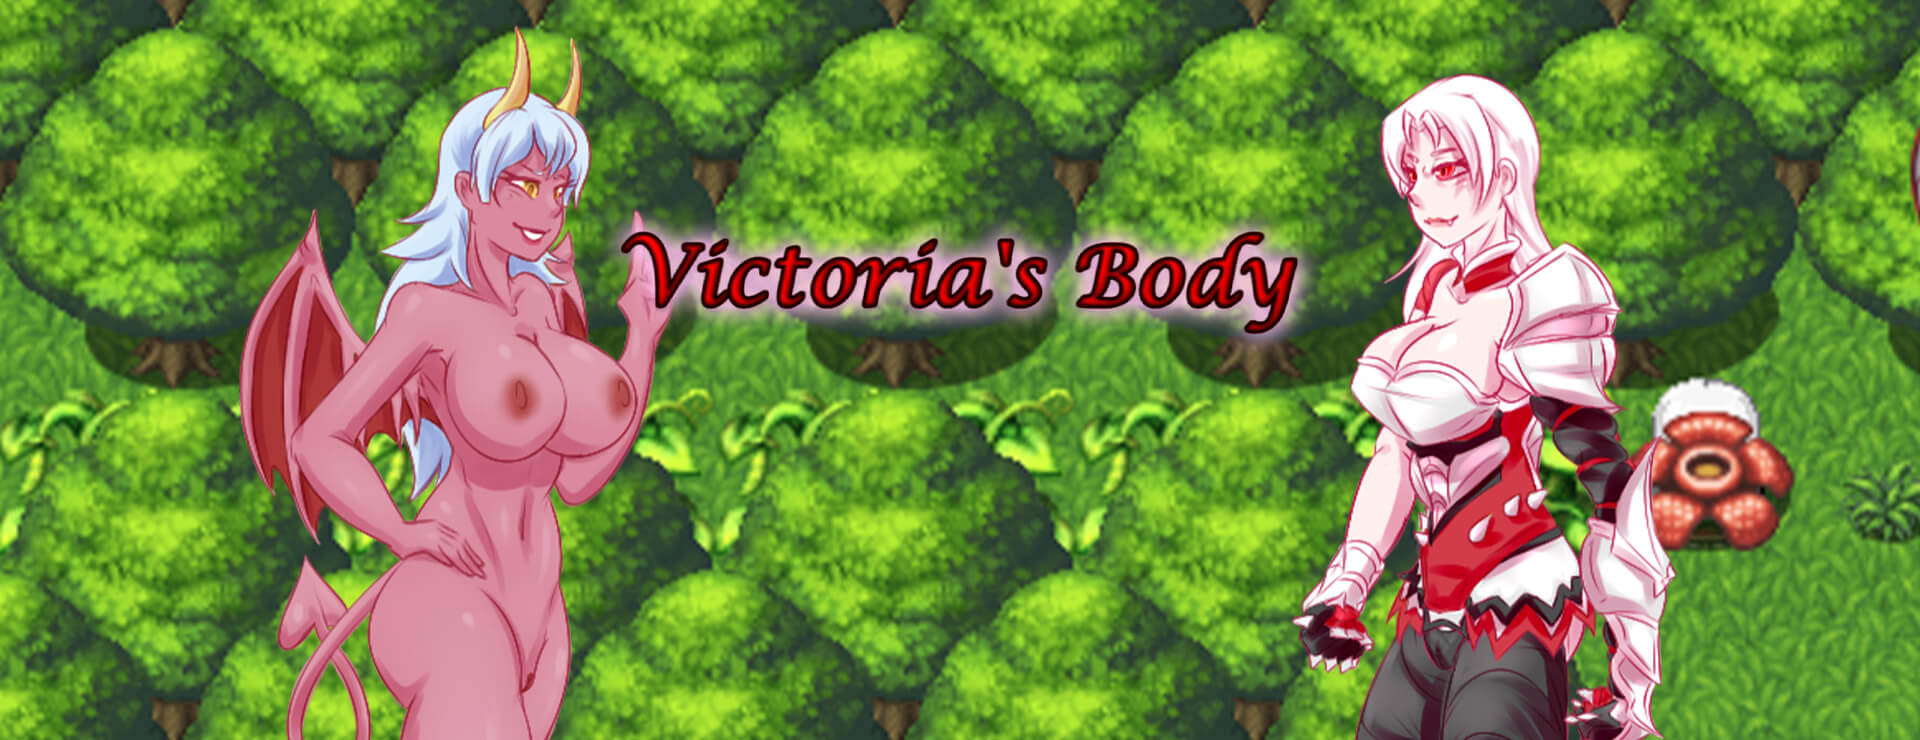 Victoria's Body - 角色扮演 遊戲